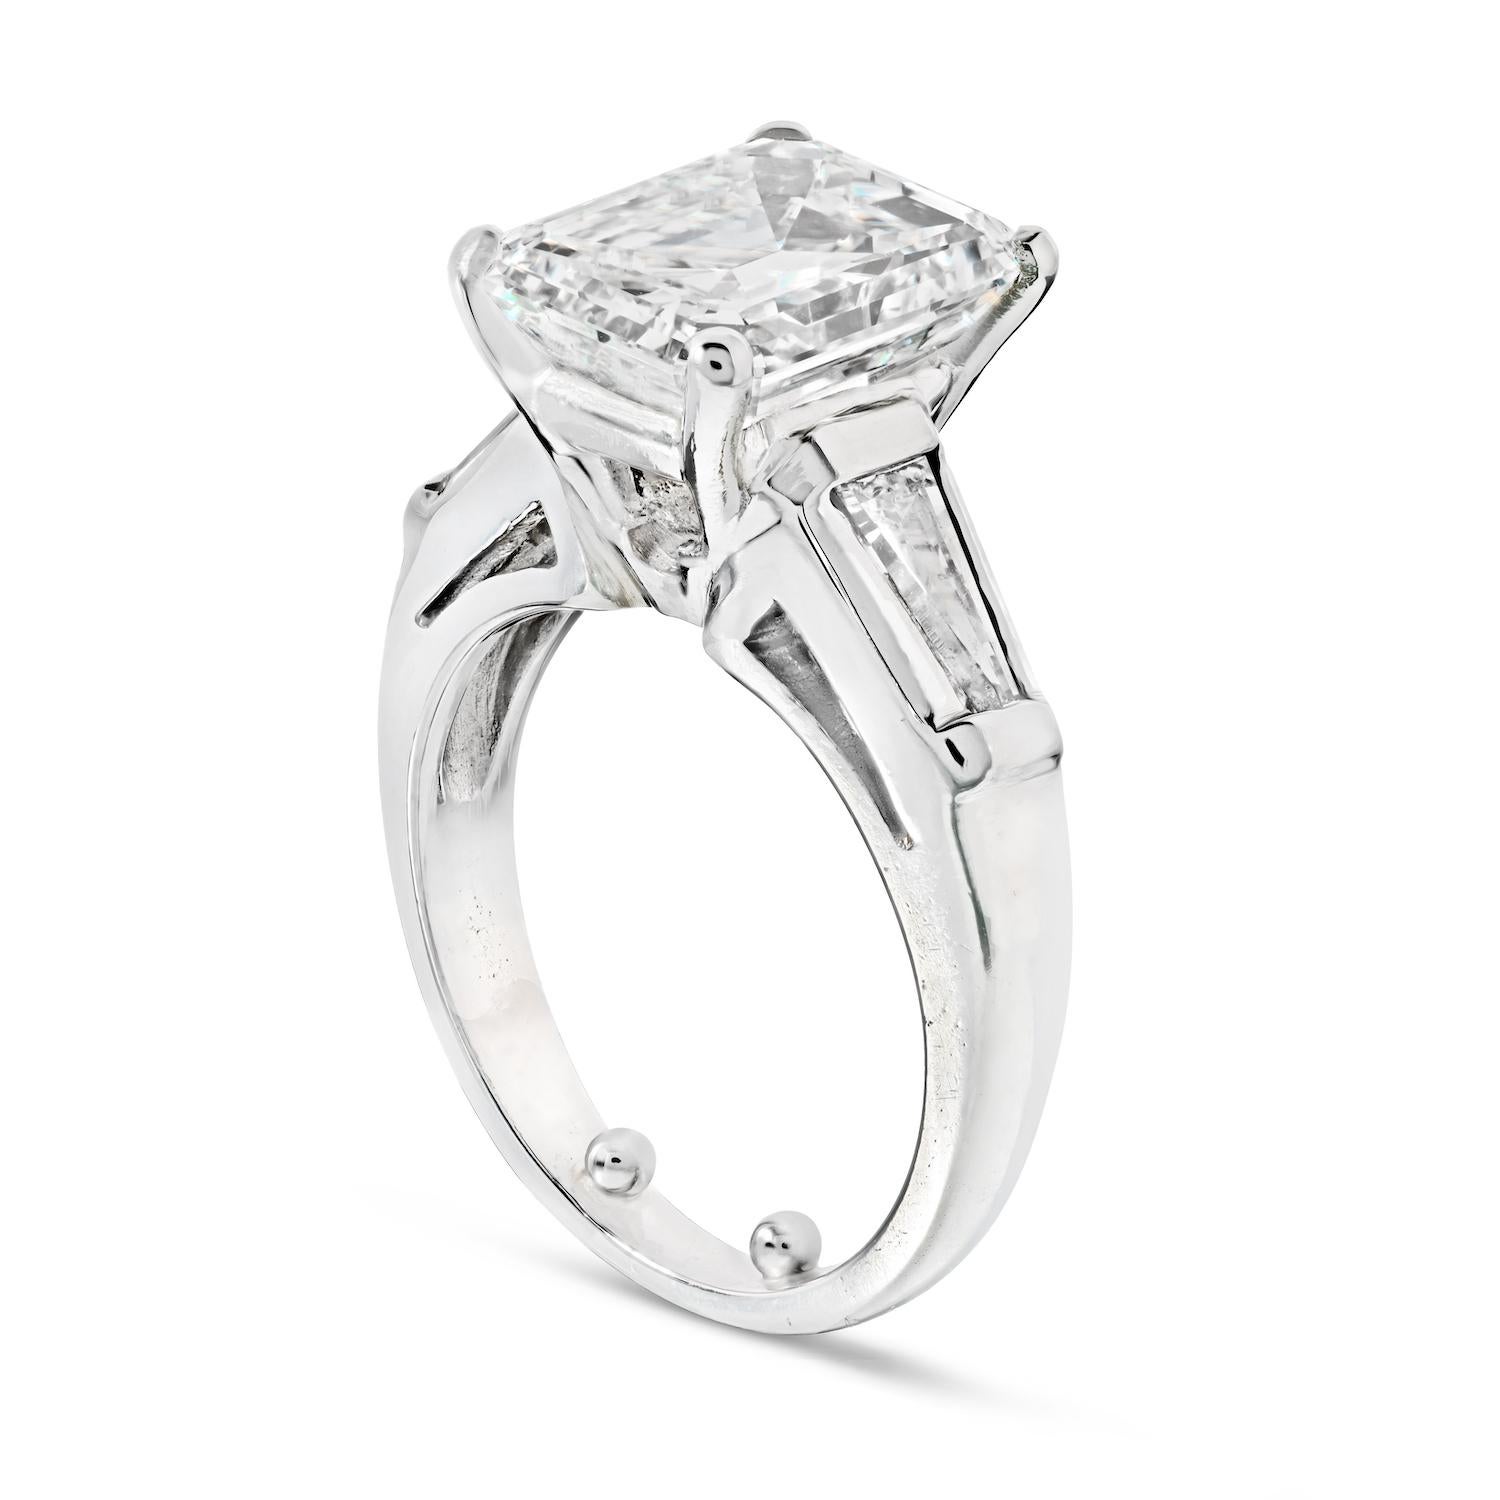 4ct emerald cut diamond ring